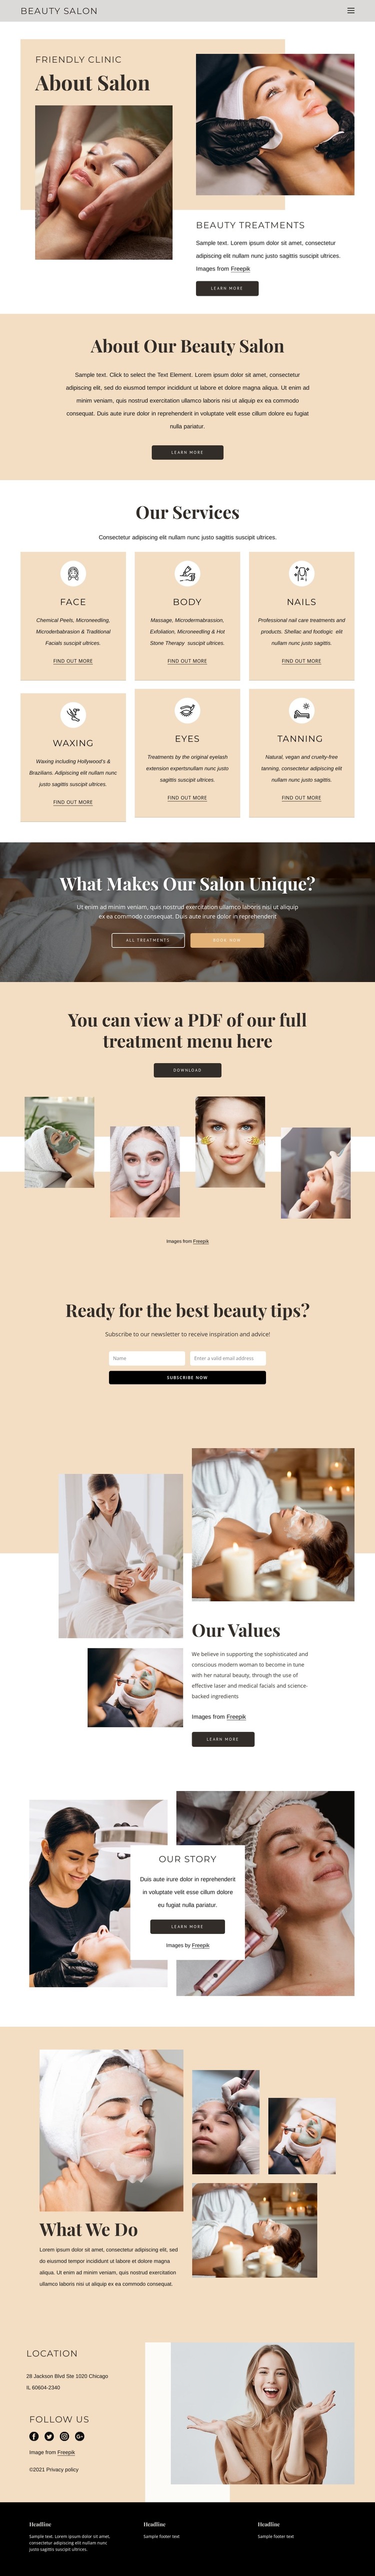 Beauty and aesthetic treatments WordPress Theme